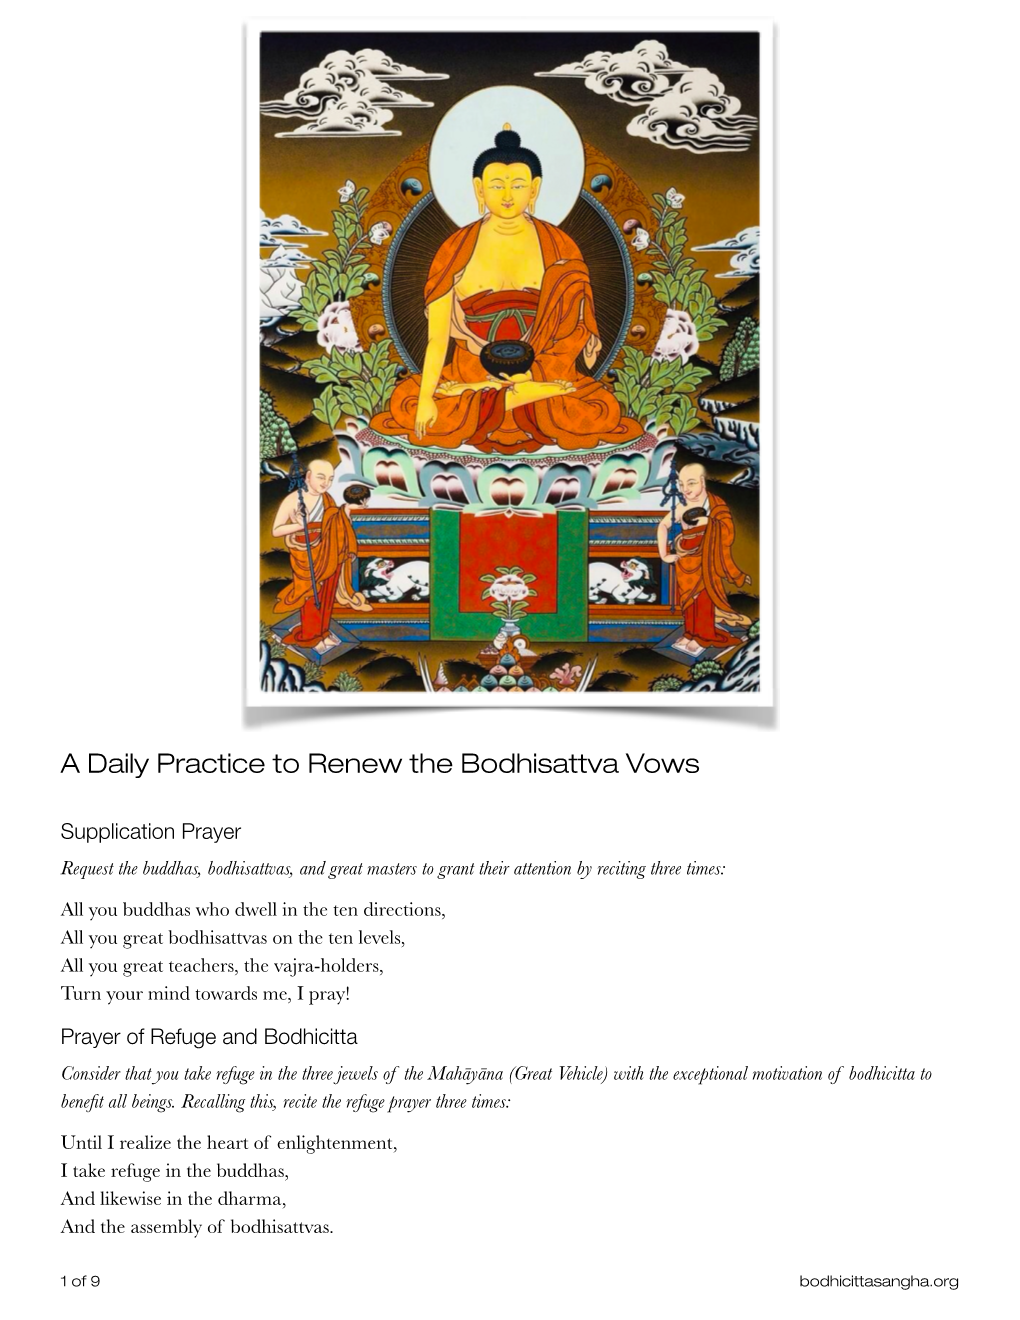 Daily Practice to Renew Bodhisattva Vows